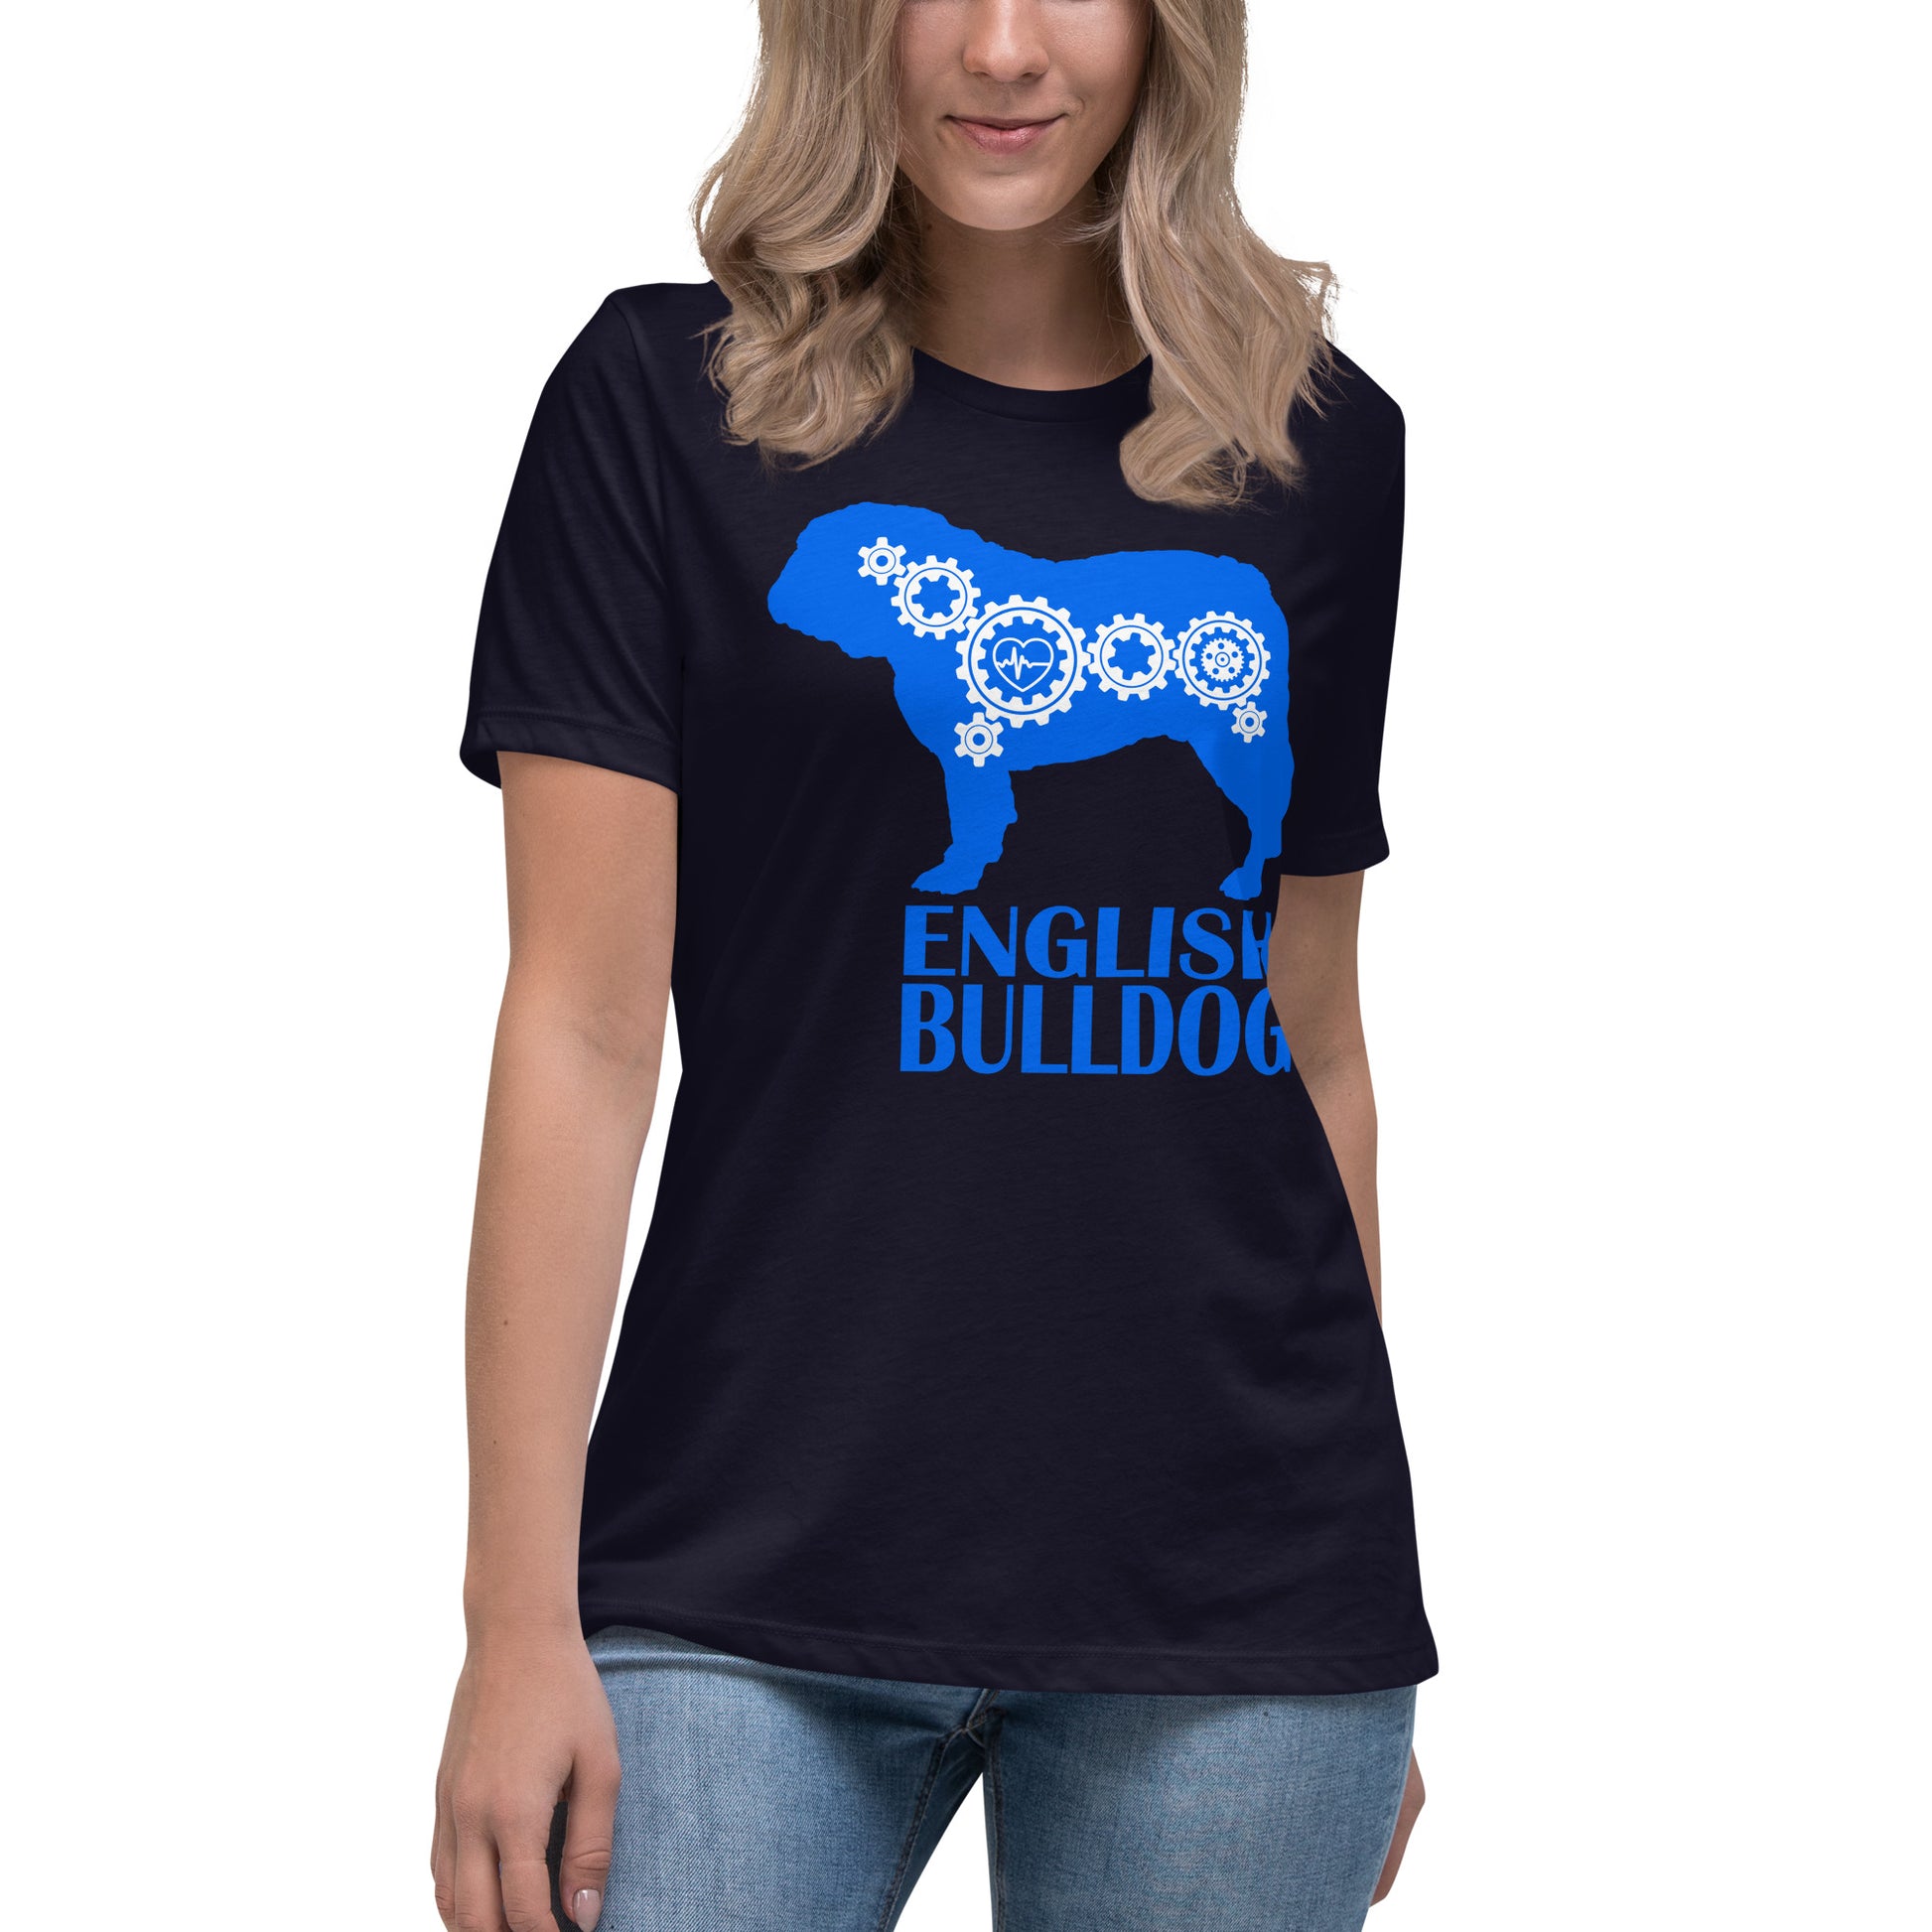 English Bulldog Bionic women’s navy t-shirt by Dog Artistry.